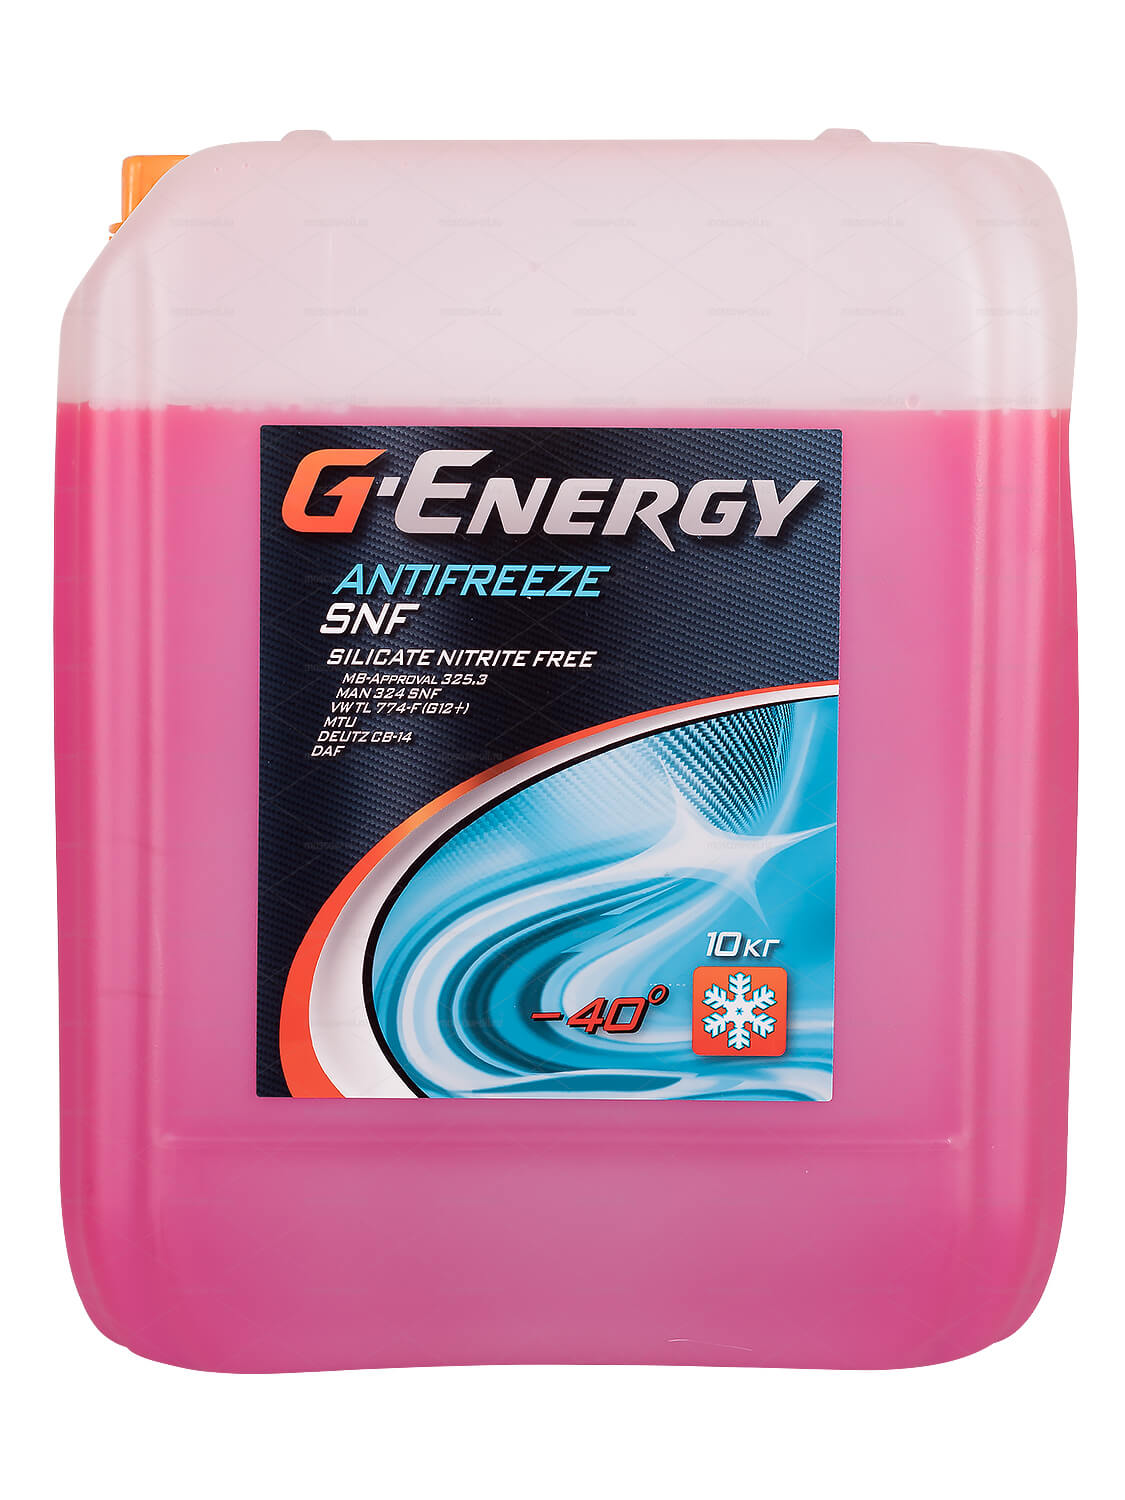 G-Energy Antifreeze SNF 40